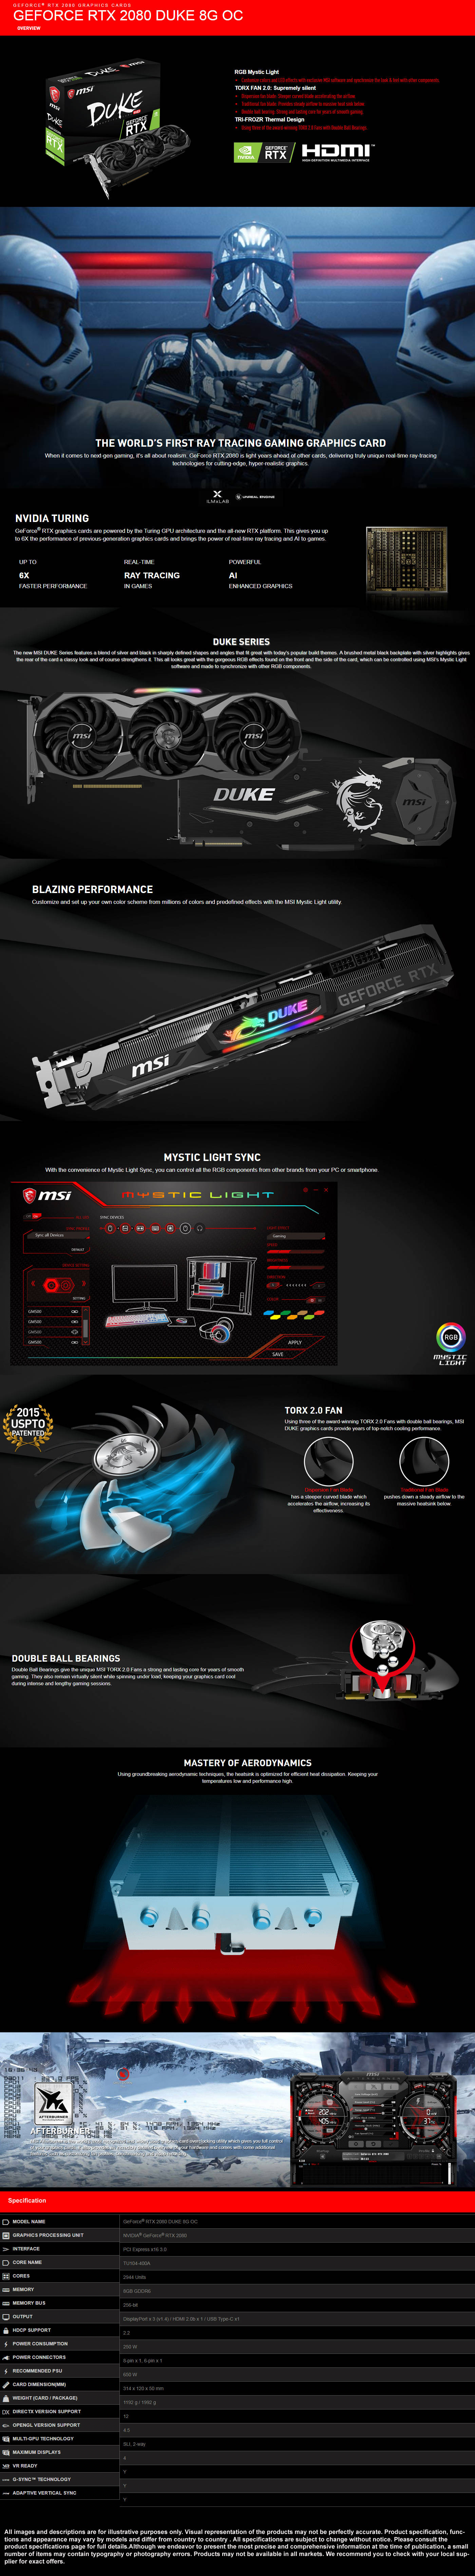  Buy Online MSI Geforce RTX 2080 Duke 8GB OC GDDR6